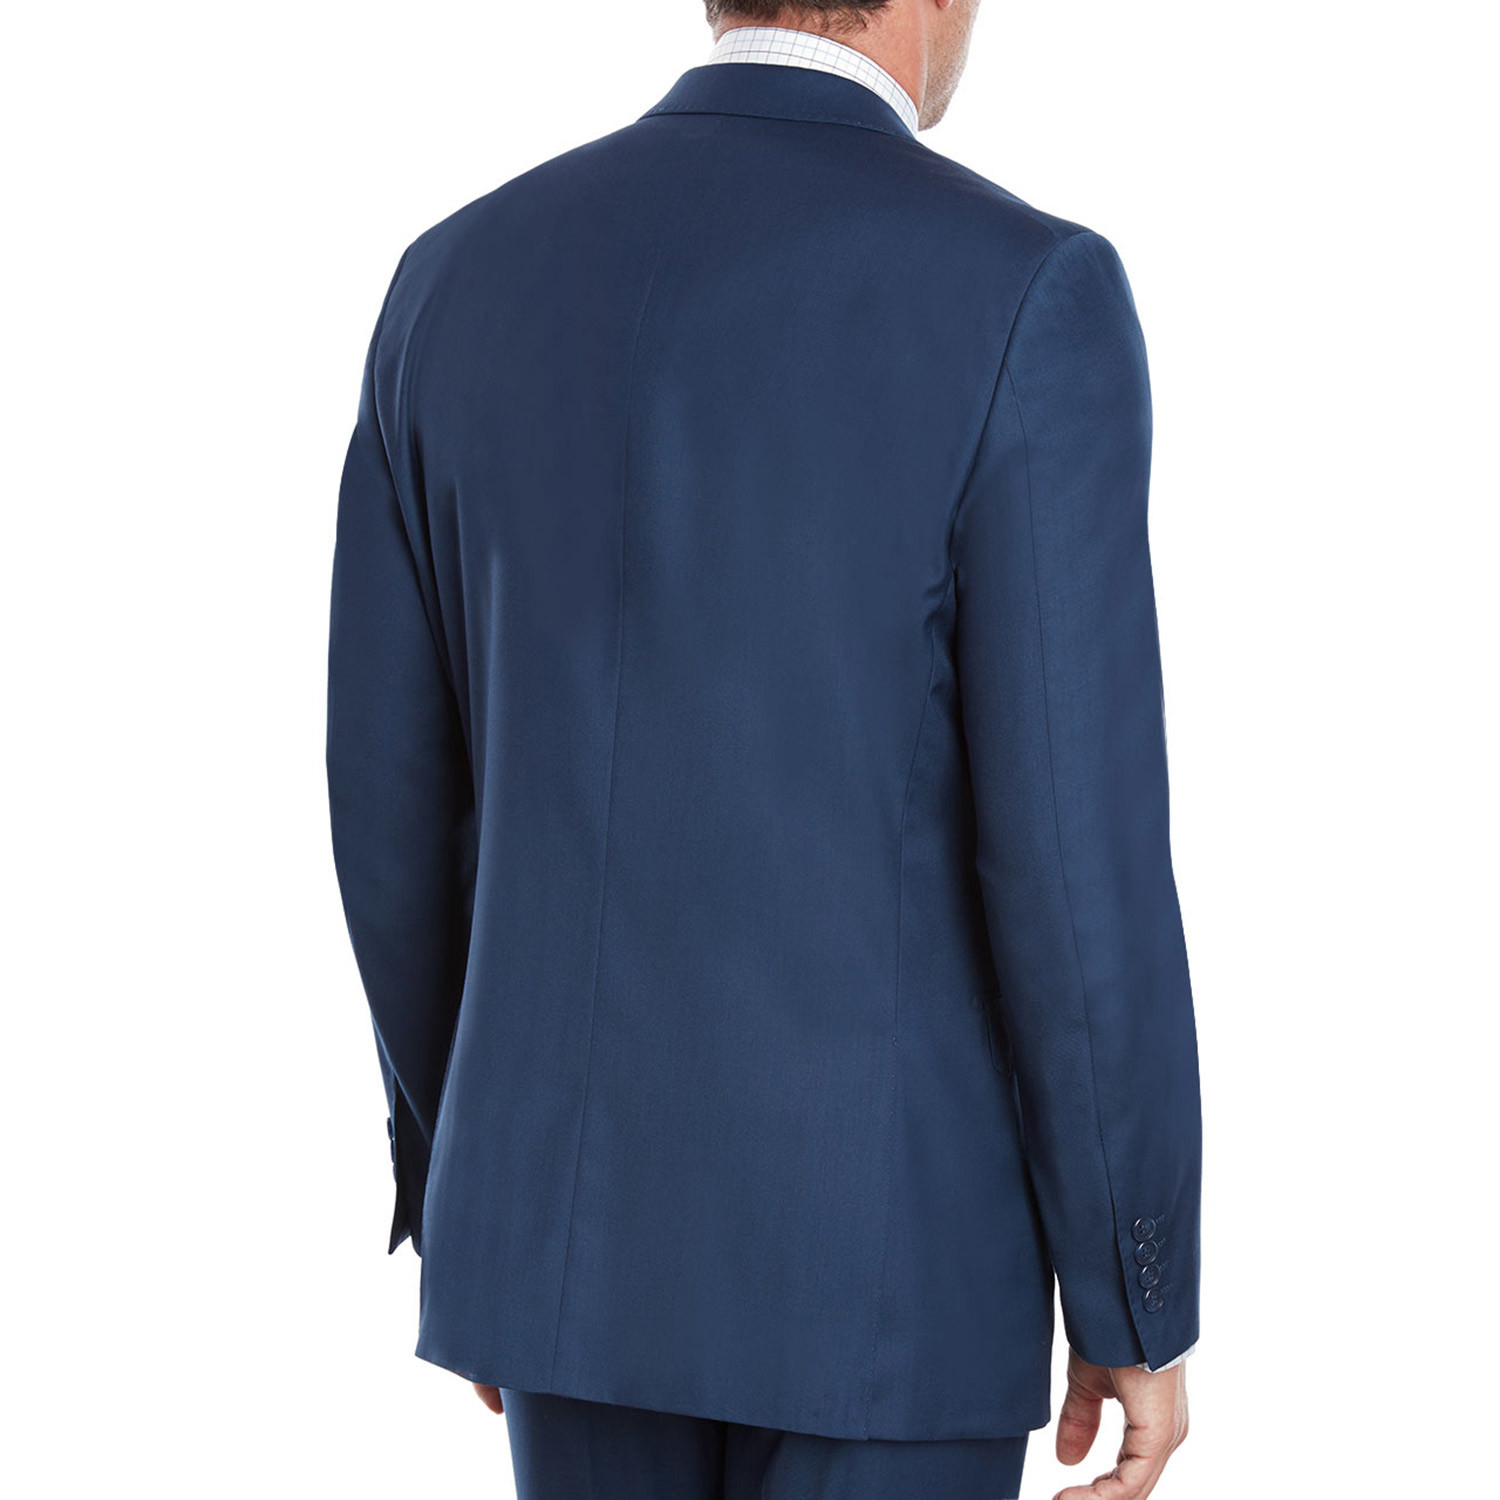 Wall Street Modern Fit Vested Suit // Blue Navy (US: 34S) - Sebastian ...